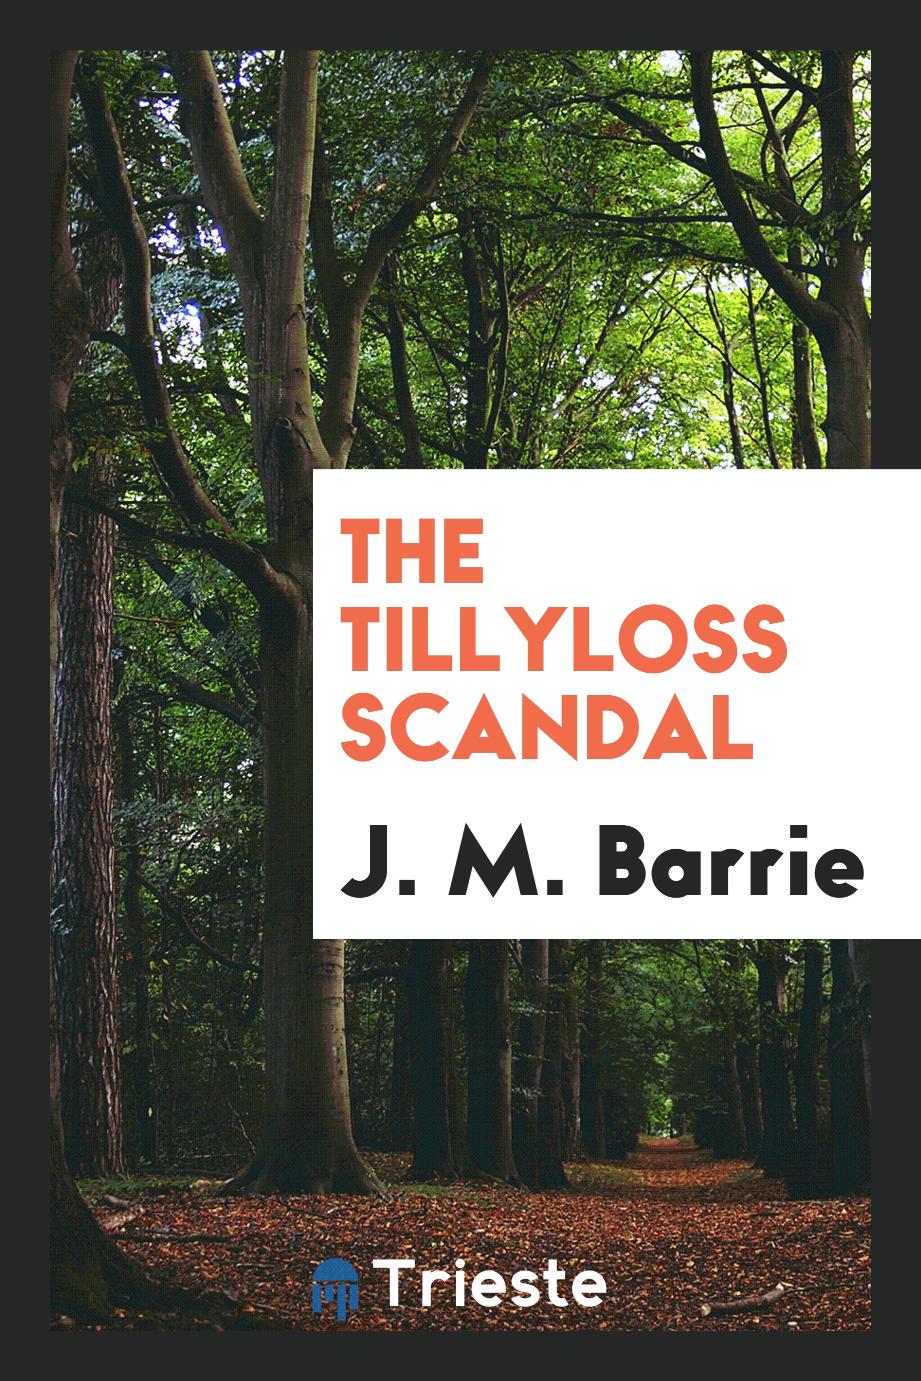 The Tillyloss scandal